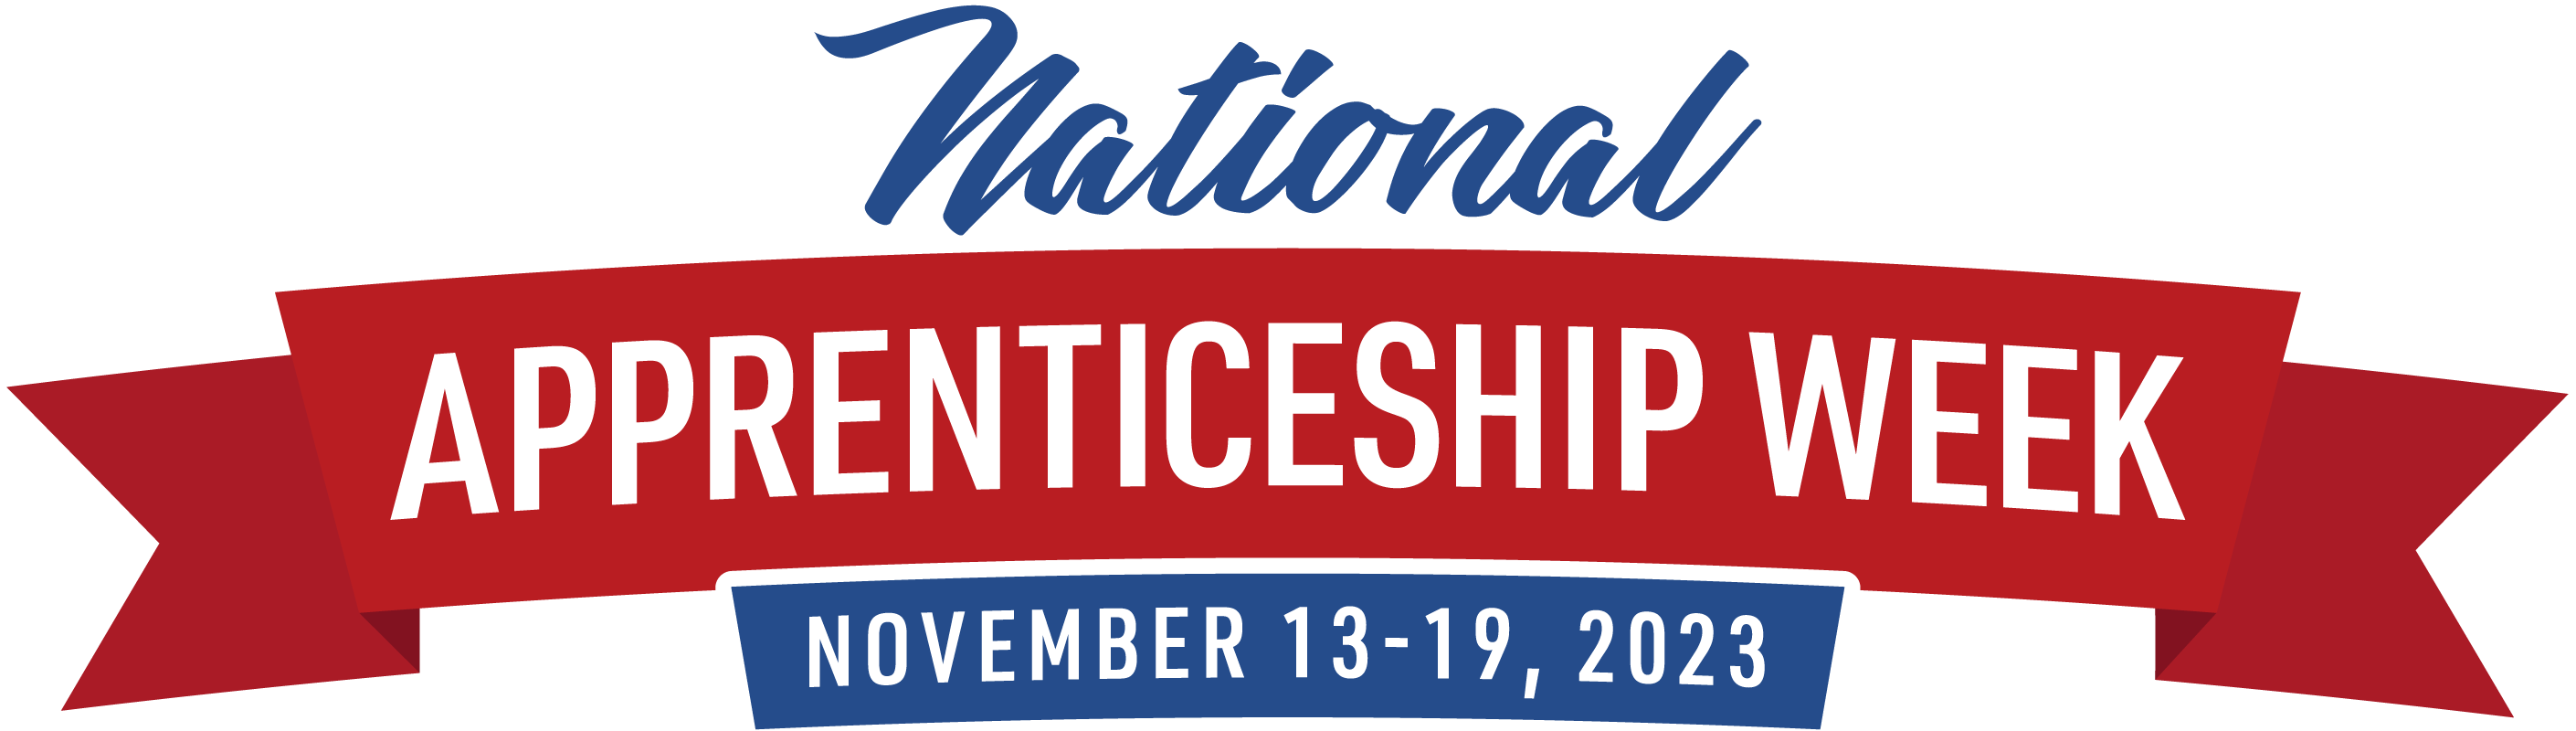 National Apprenticeship Week November 13-19, 2023